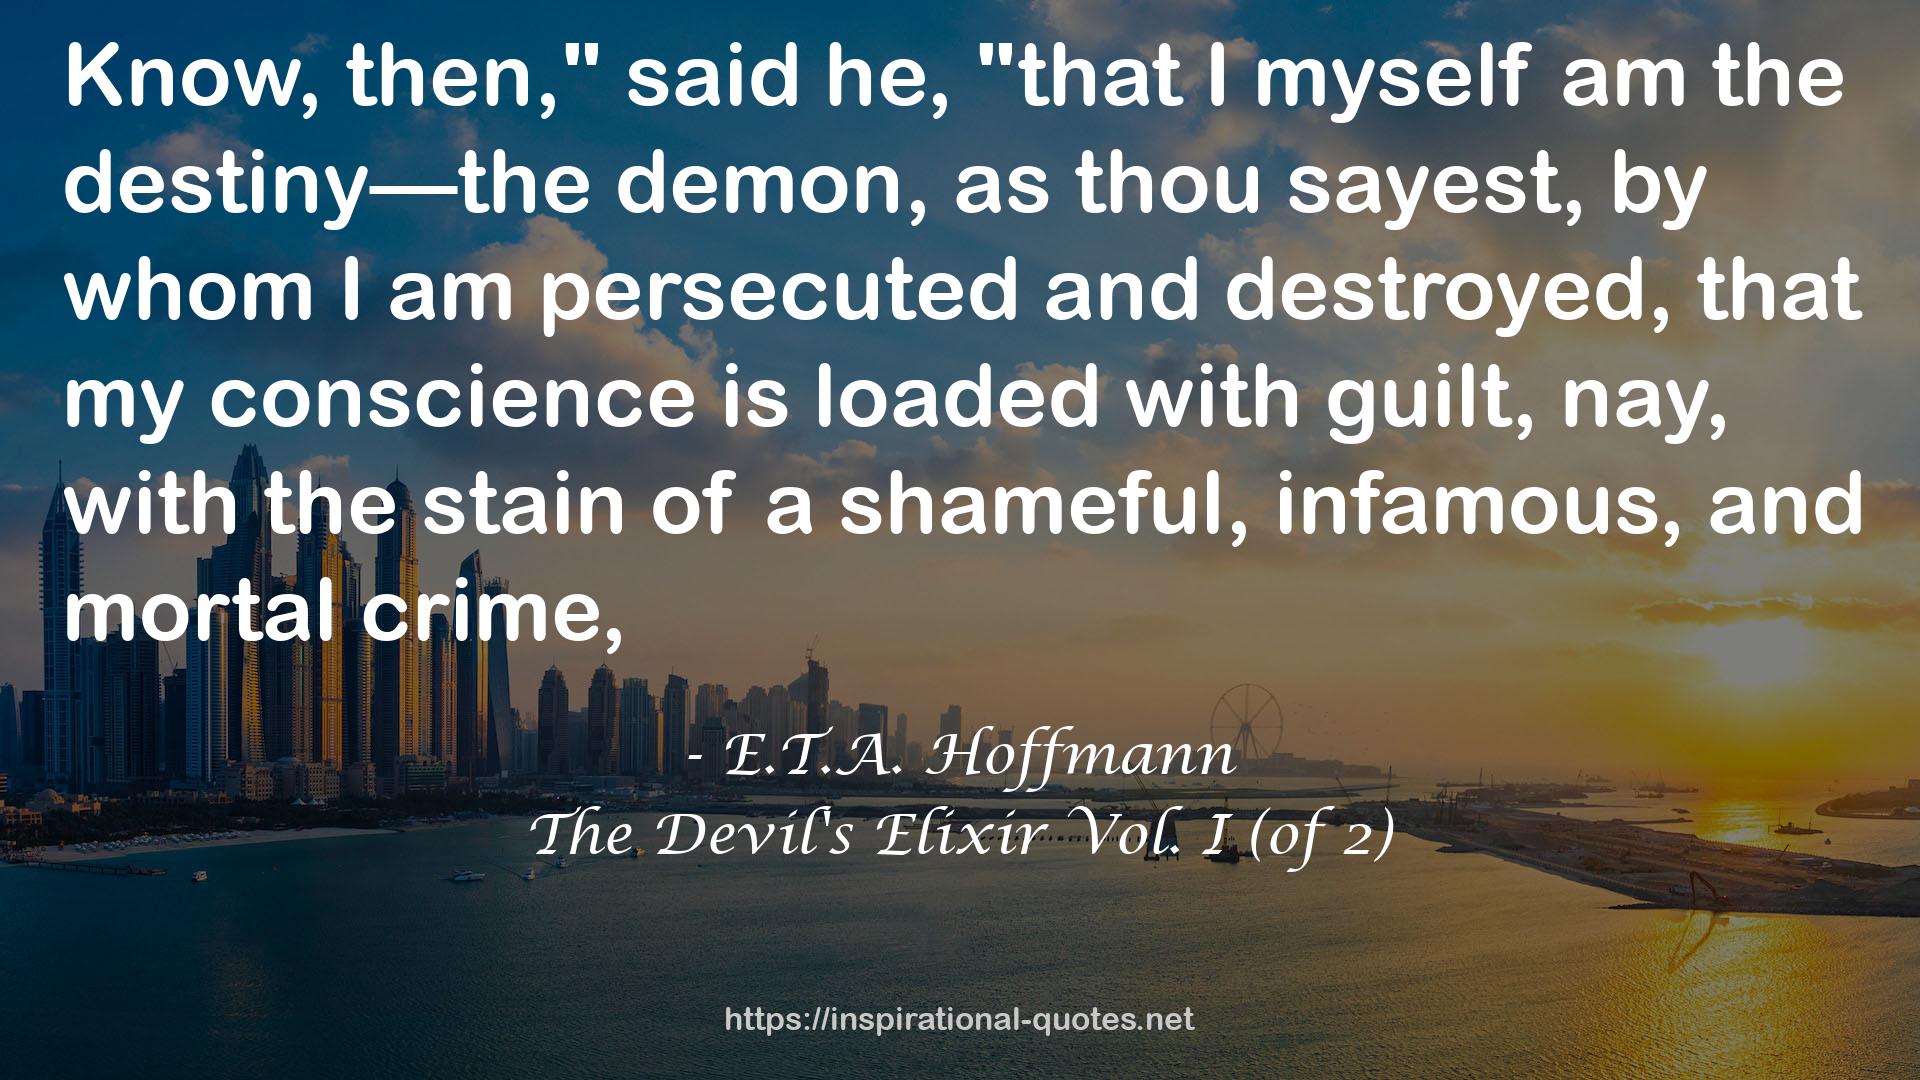 The Devil's Elixir Vol. I (of 2) QUOTES